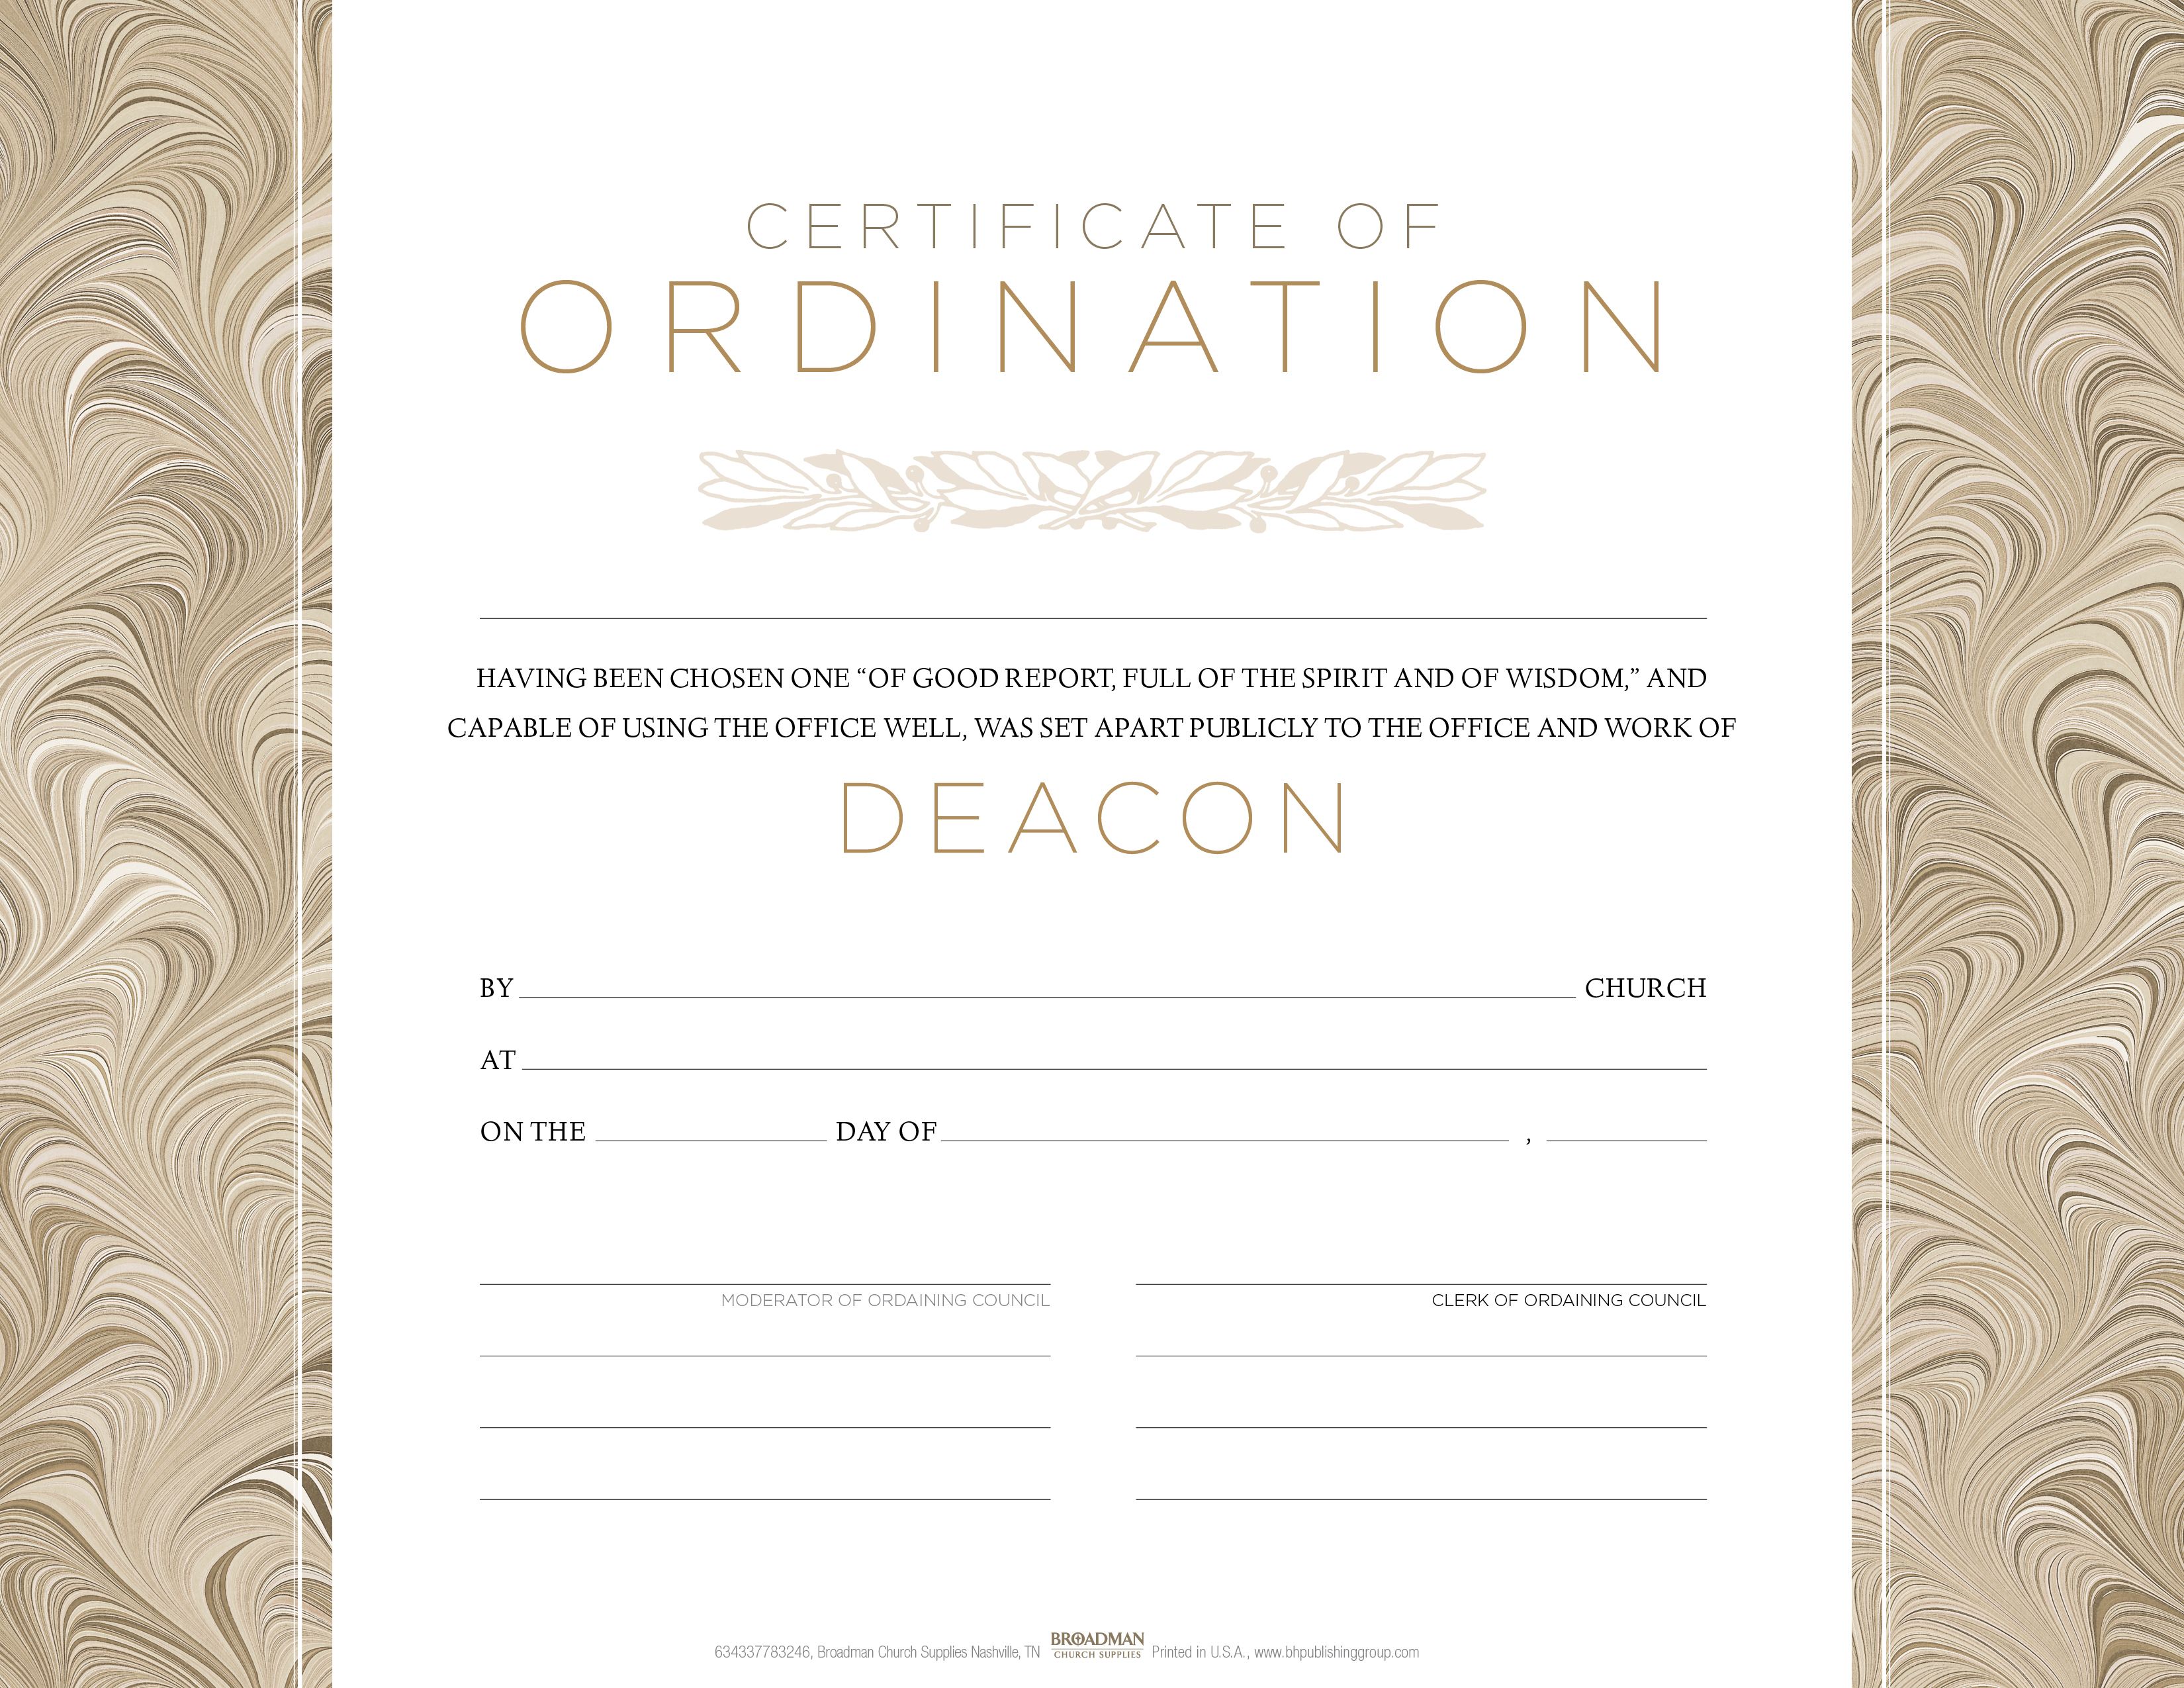 Deacon Ordination Flat Certificate (Pkg 22) - B&H Publishing With Certificate Of Ordination Template